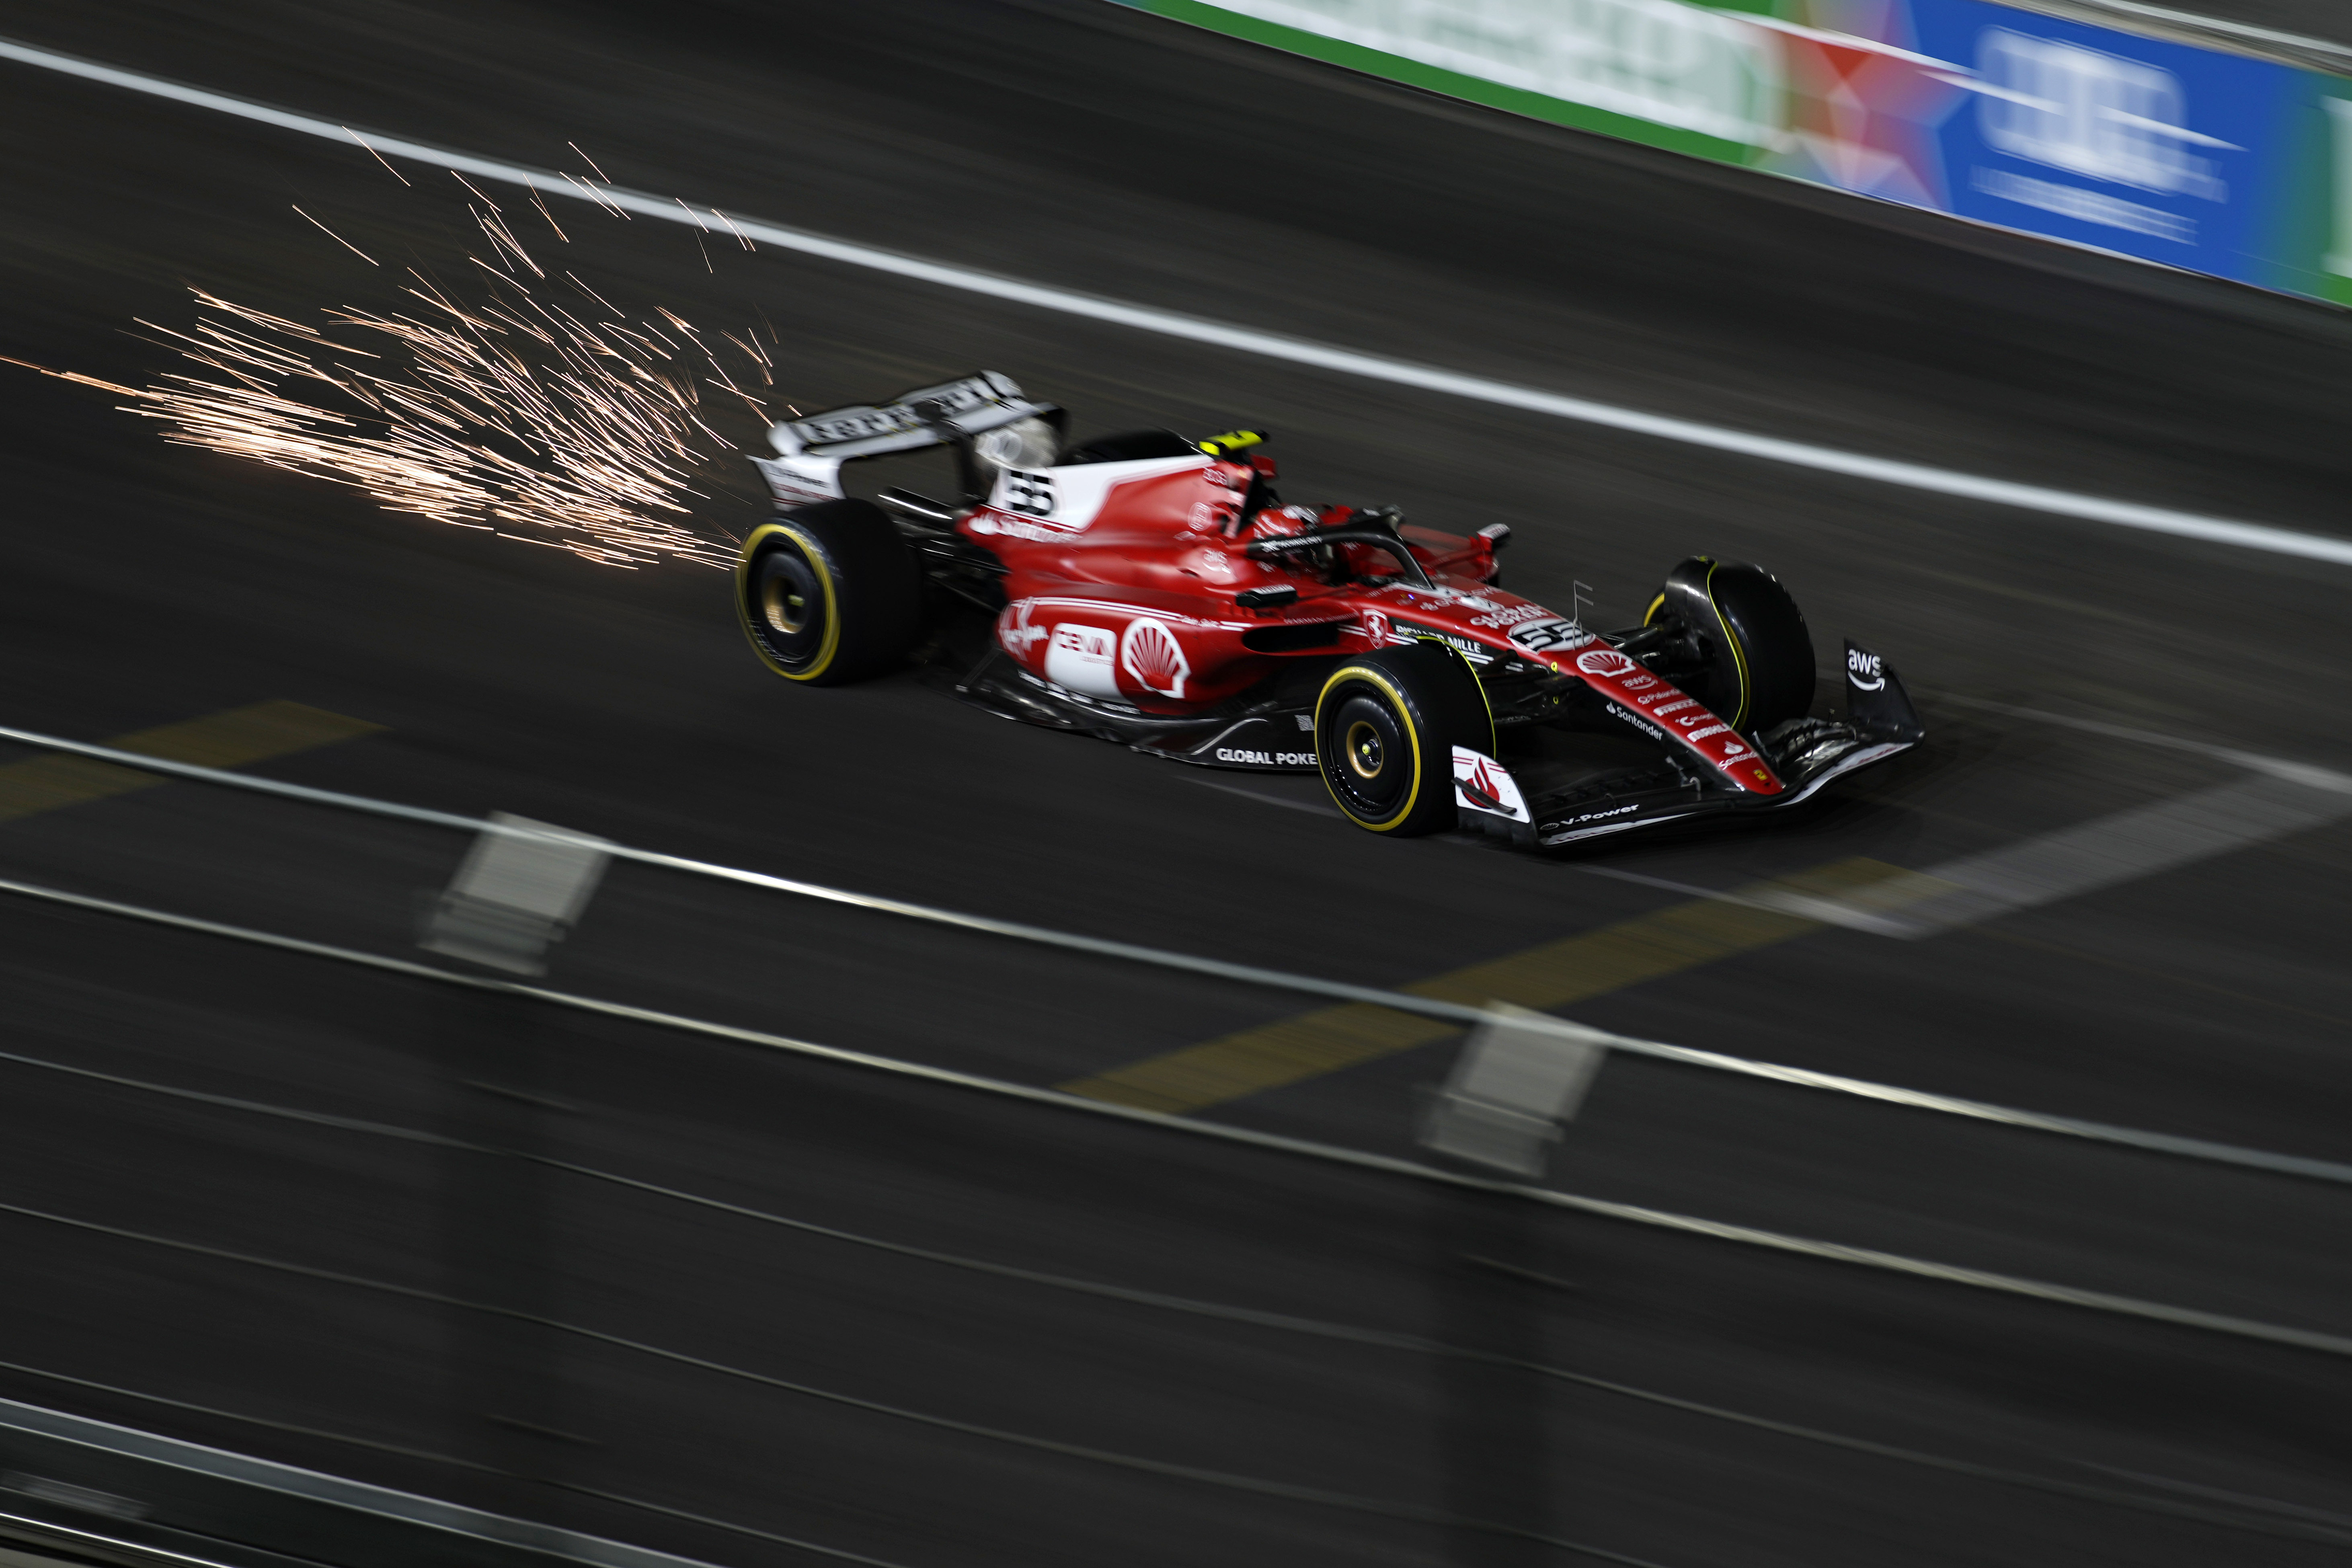 Formula 1 Cars Hit the Las Vegas Circuit for Grand Prix Practice